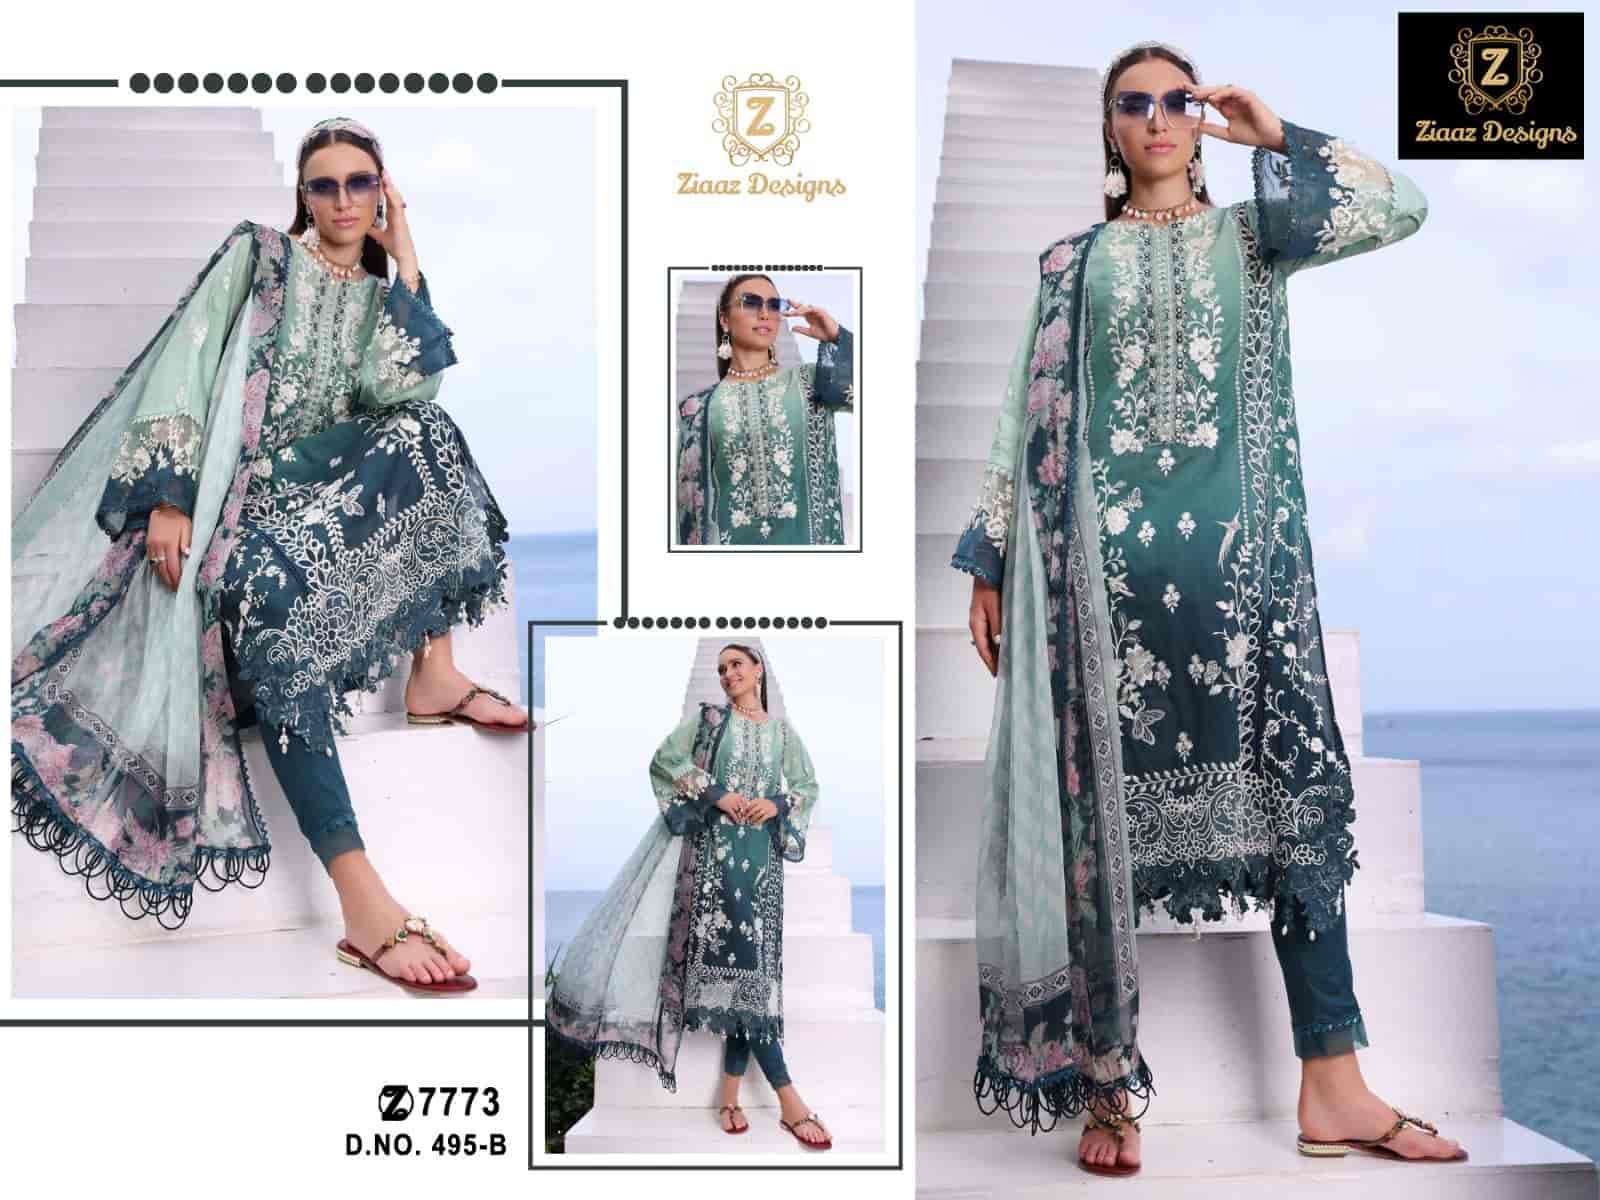 Ziaaz Designs 495 B Festive Wear Style Designer Embroidered Salwar Suit Collection